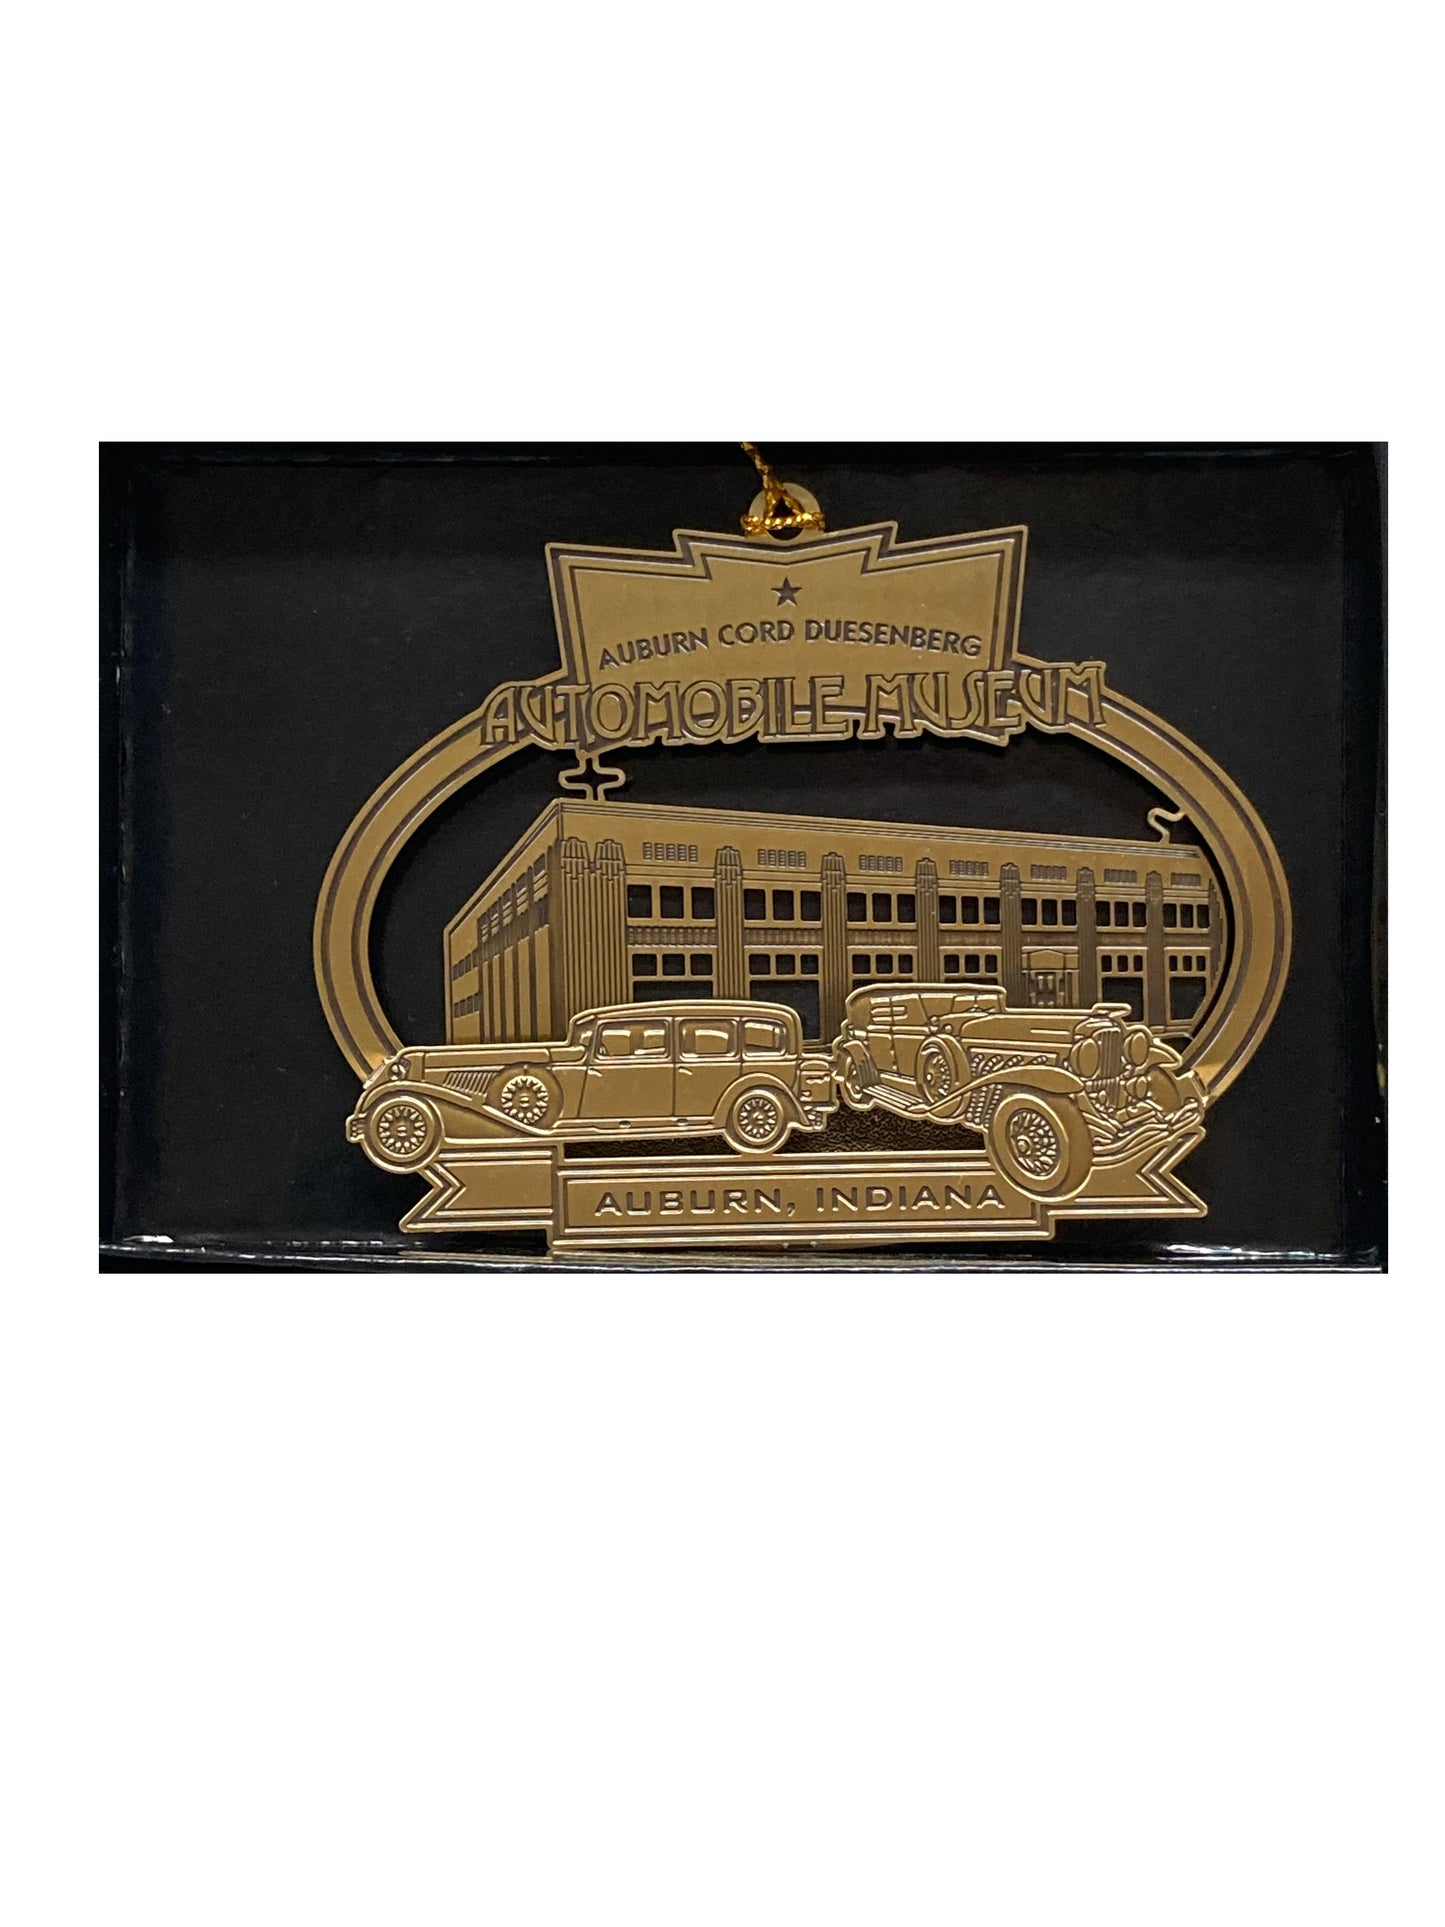 New Custom 3D Antique Brass Museum ornament from Charleston Mint